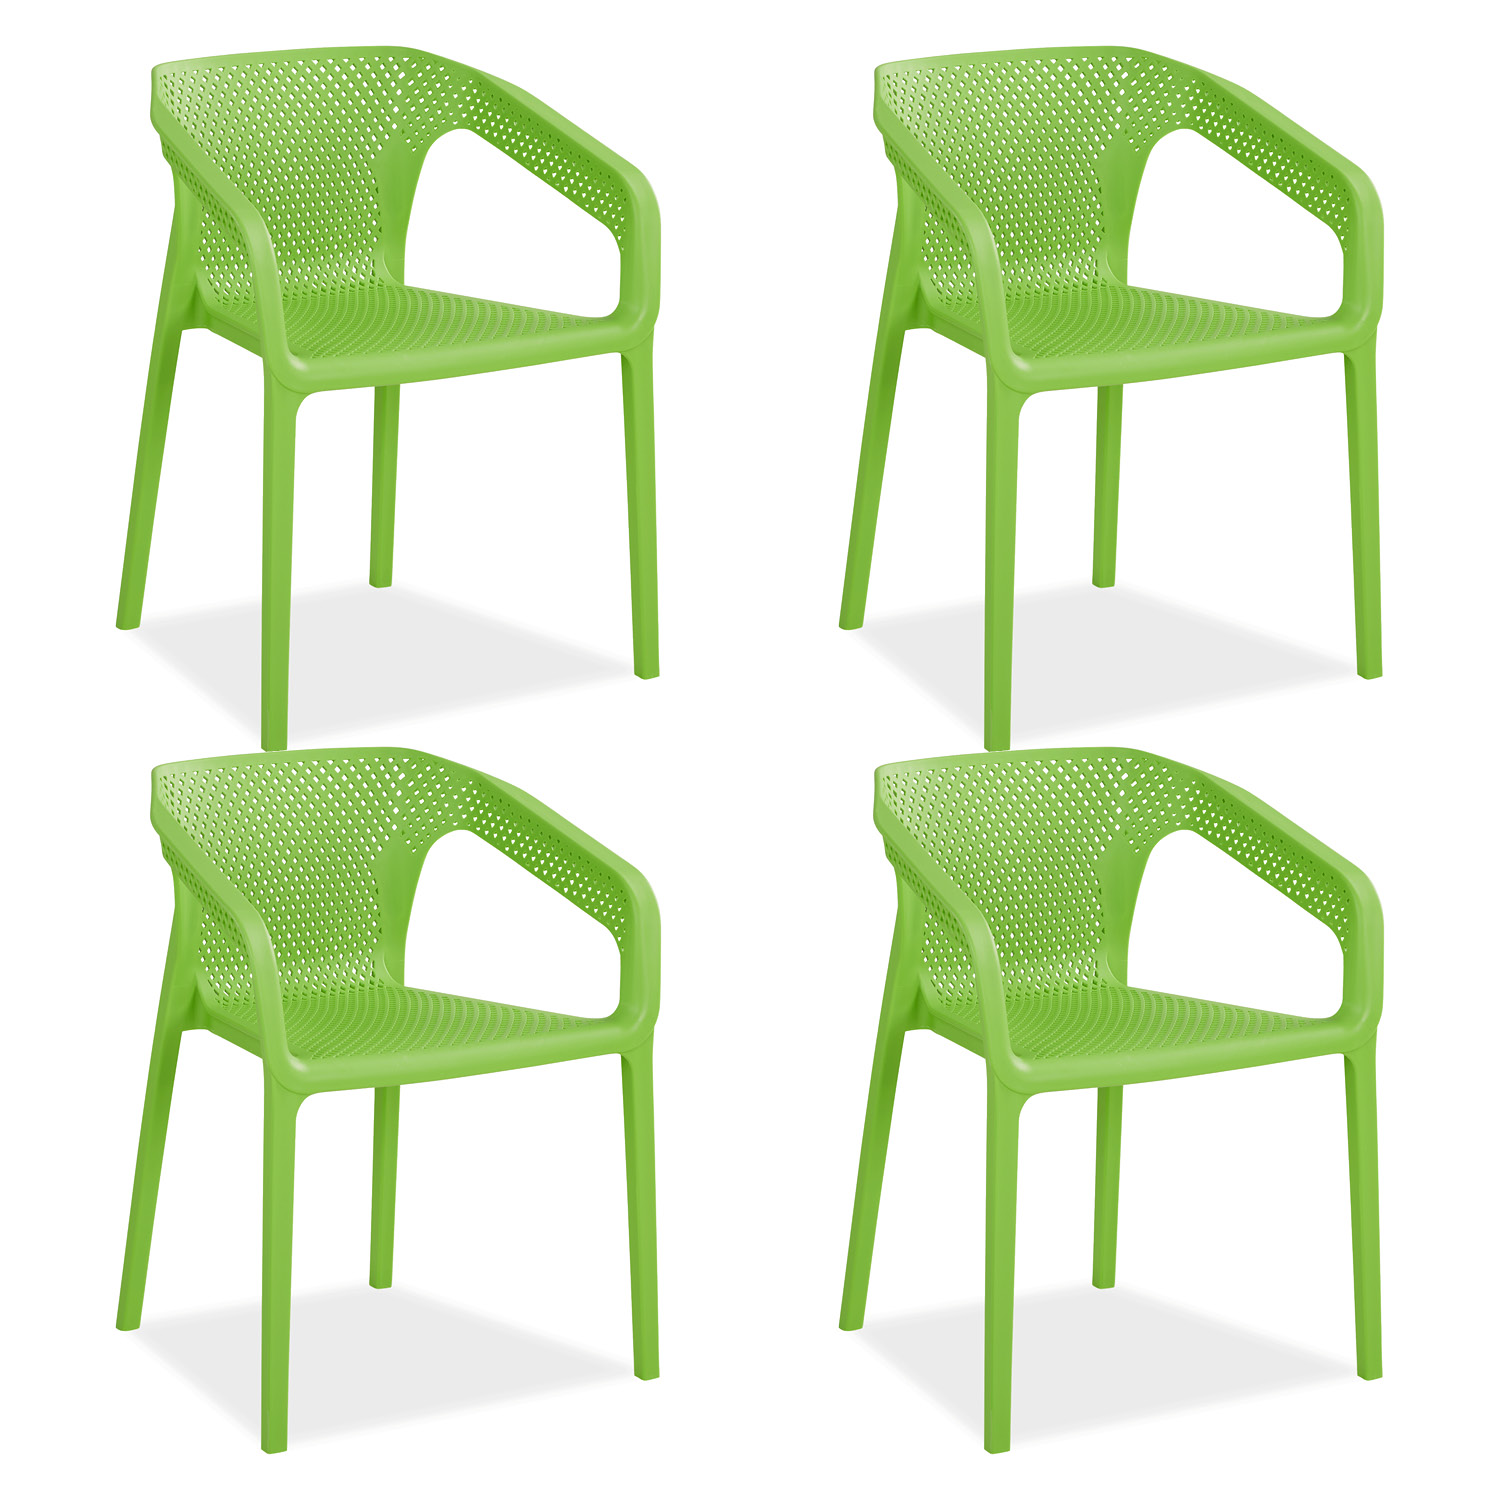 Gartenstuhl mit Armlehnen 4er Set Gartensessel Grün Stühle Kunststoff Stapelstühle Balkonstuhl Outdoor-Stuhl